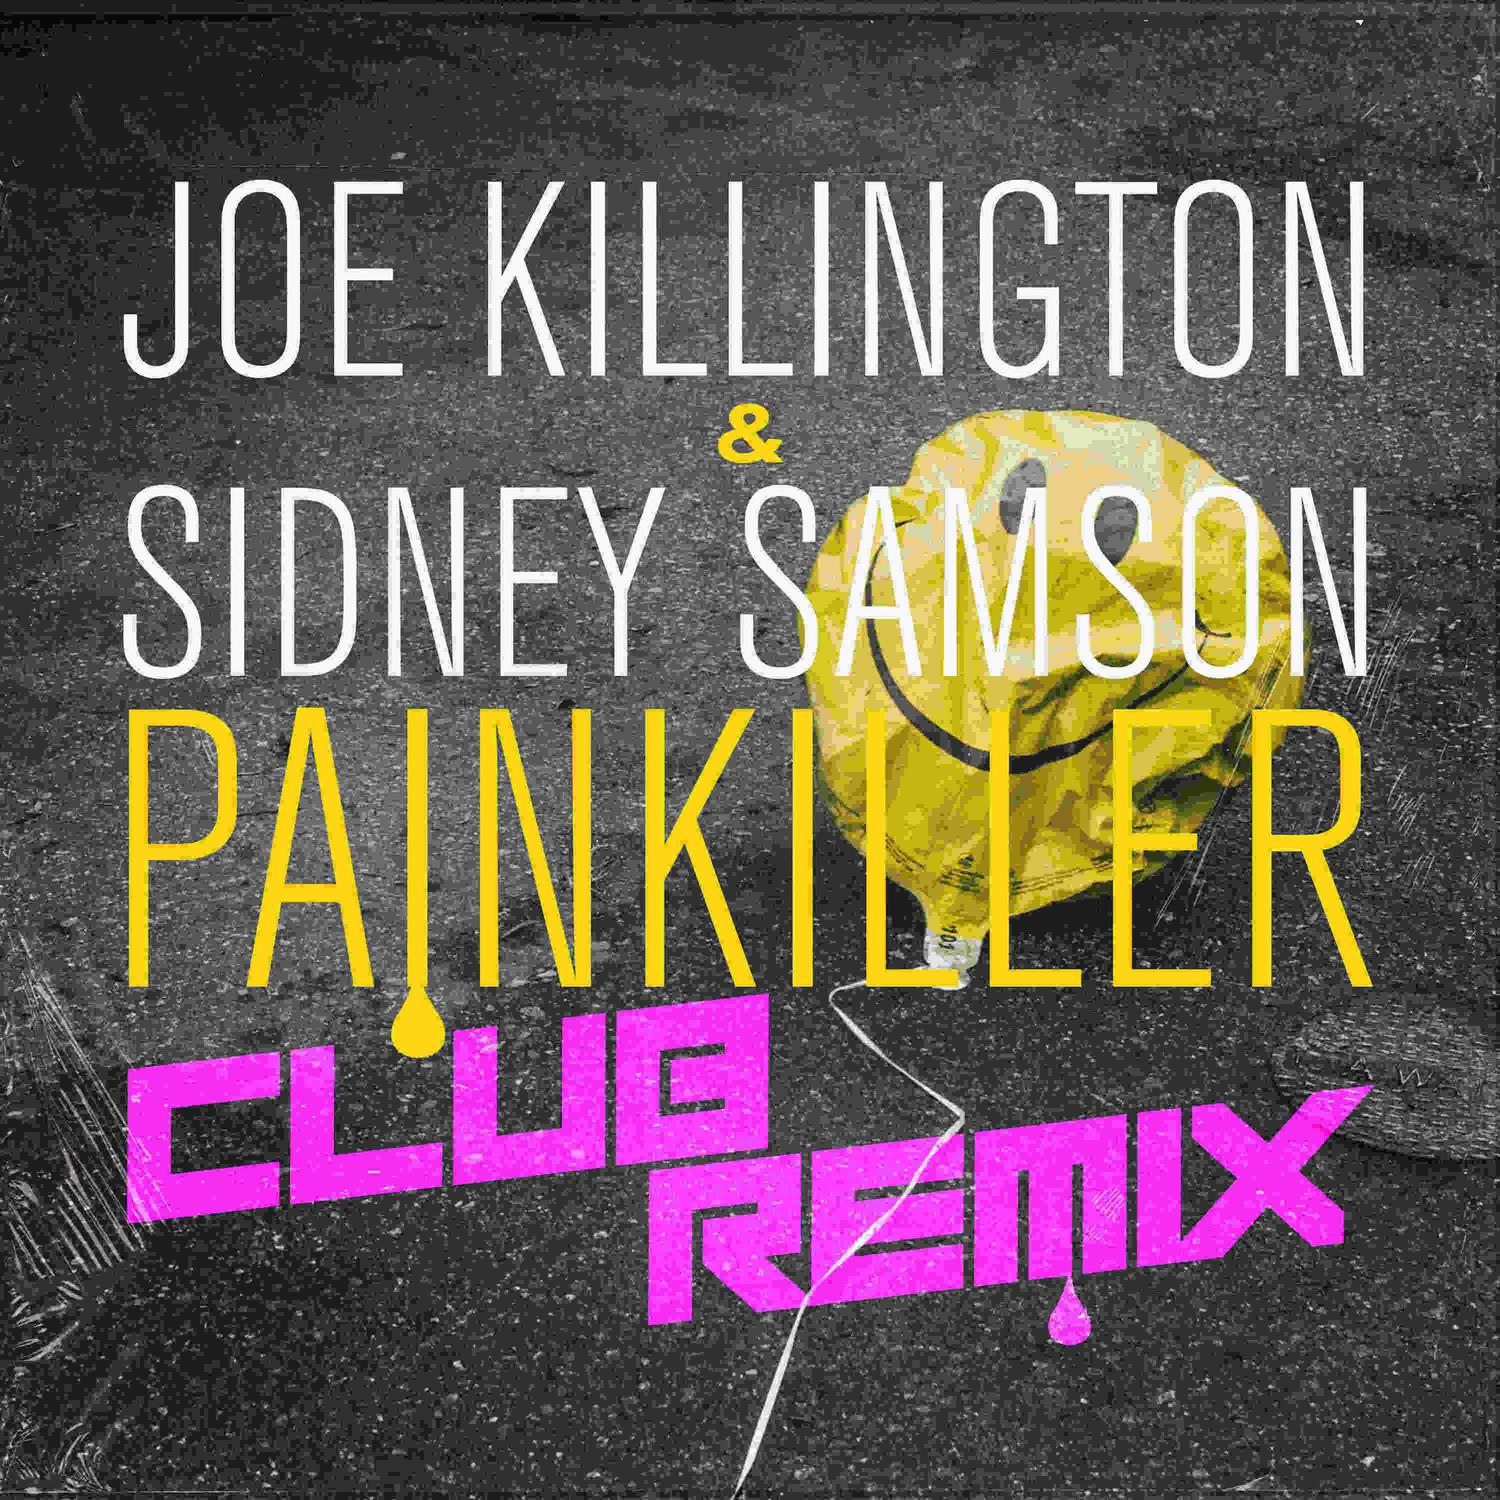 Joe Killington - Painkiller (Sidney Samson Club Remix)